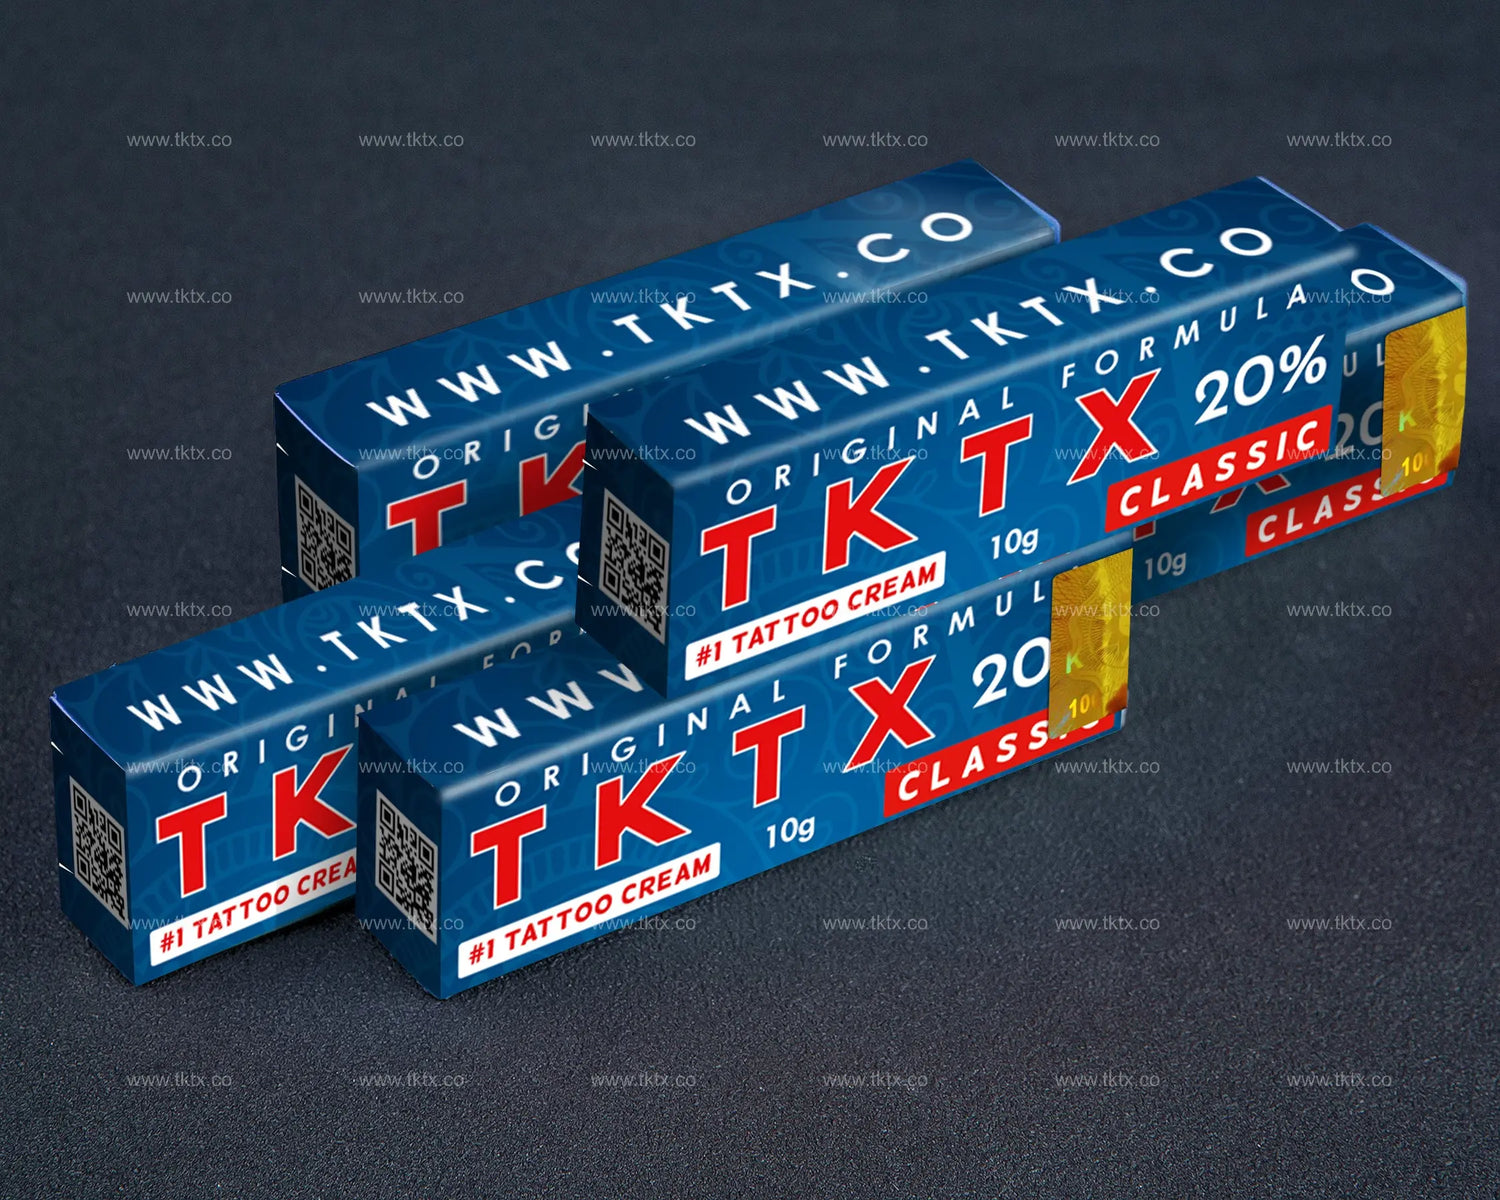 TKTX 20% Blue - CLASSIC - Numbing Cream TKTX